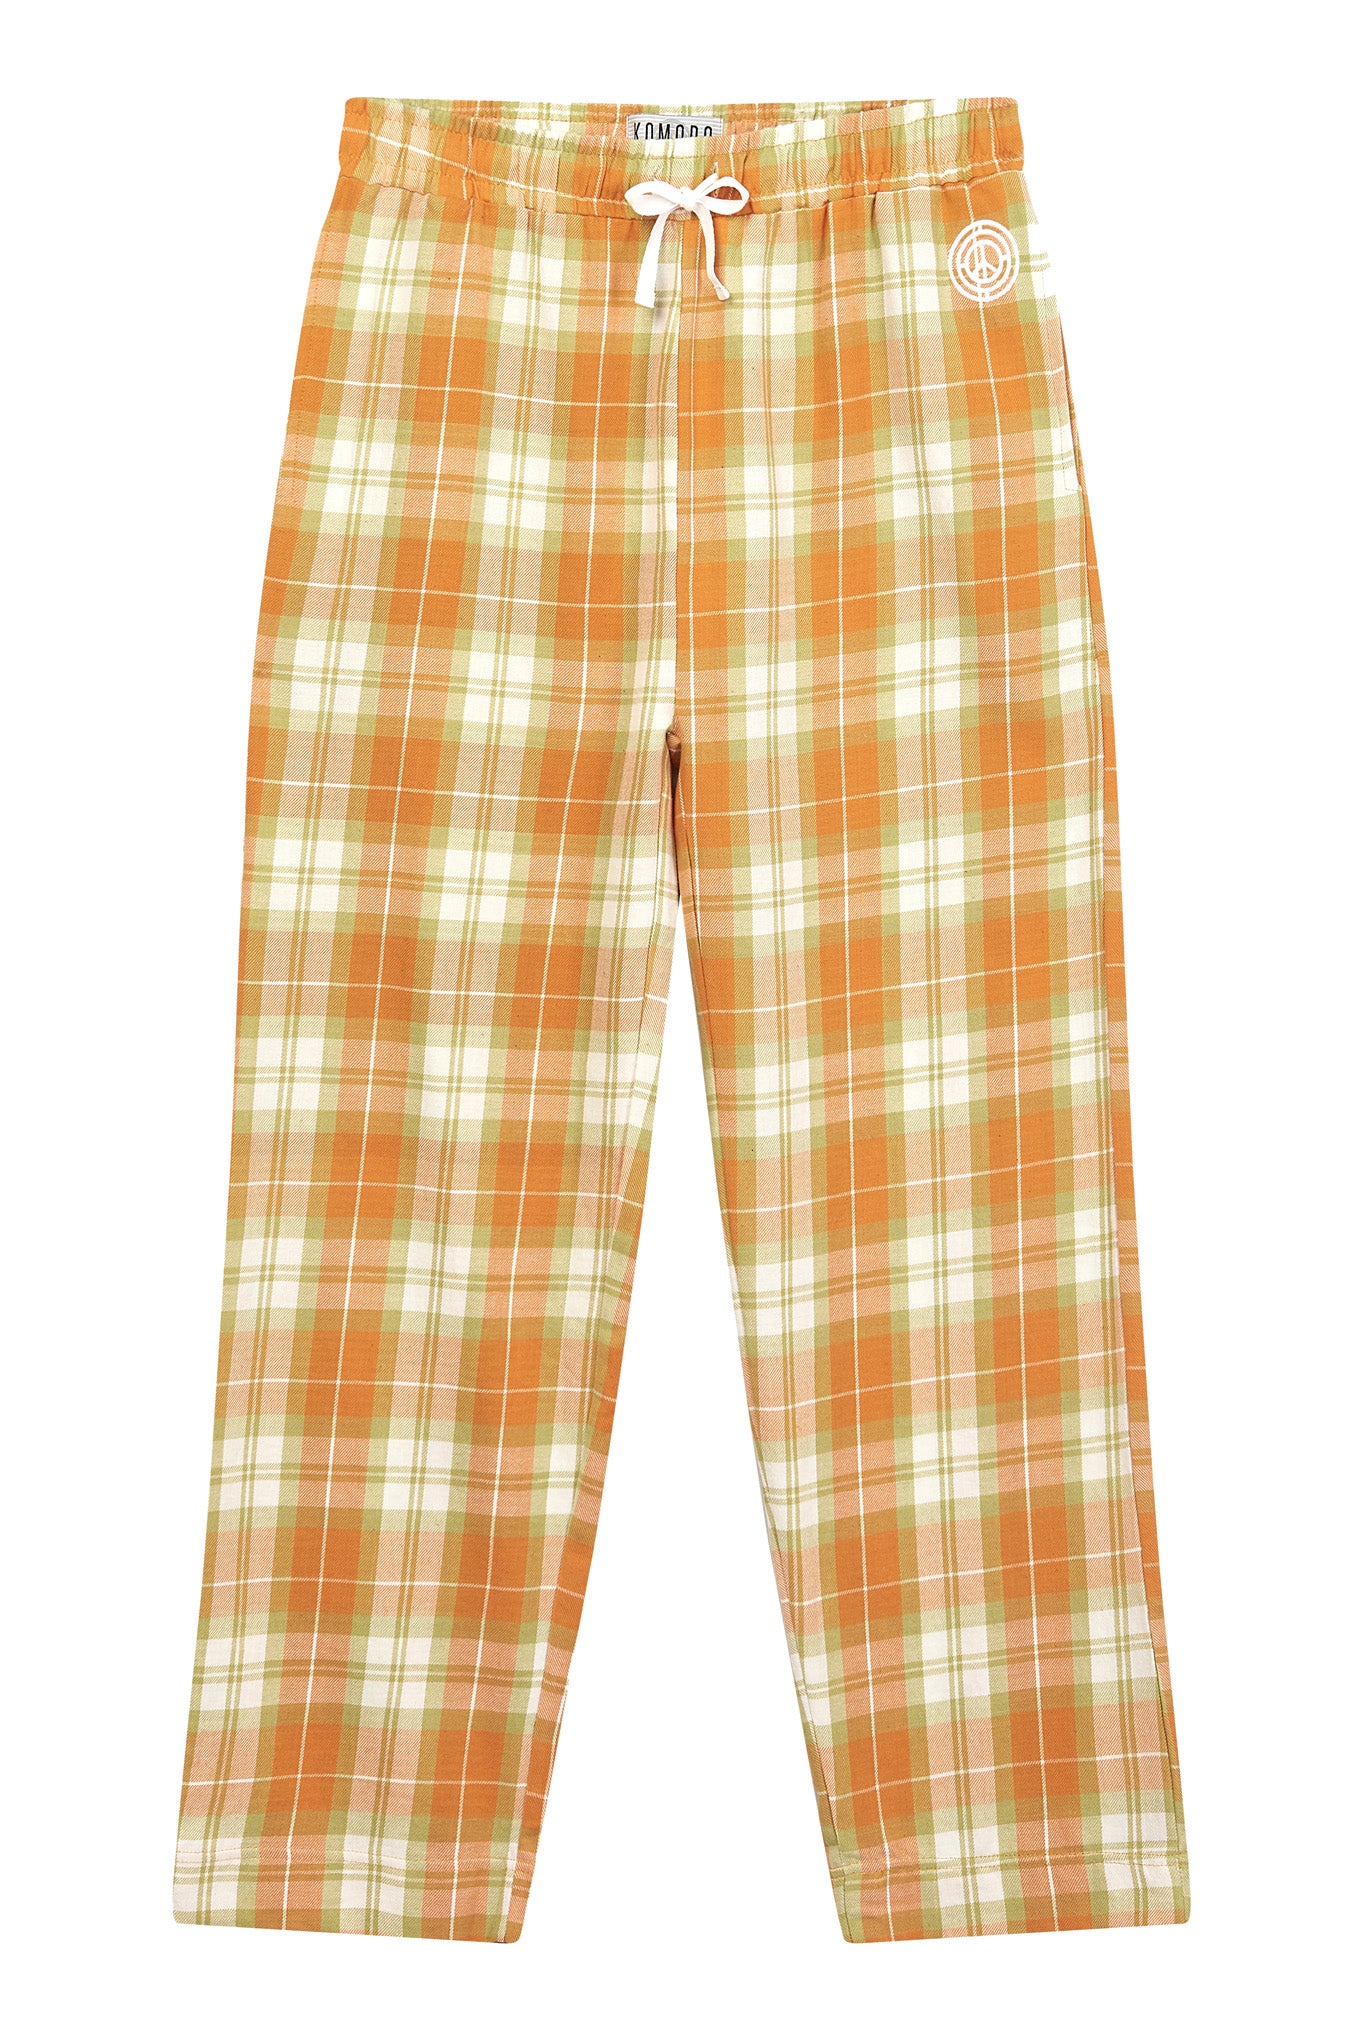 JIM JAM - Womens Organic Cotton Pyjama Bottoms Orange